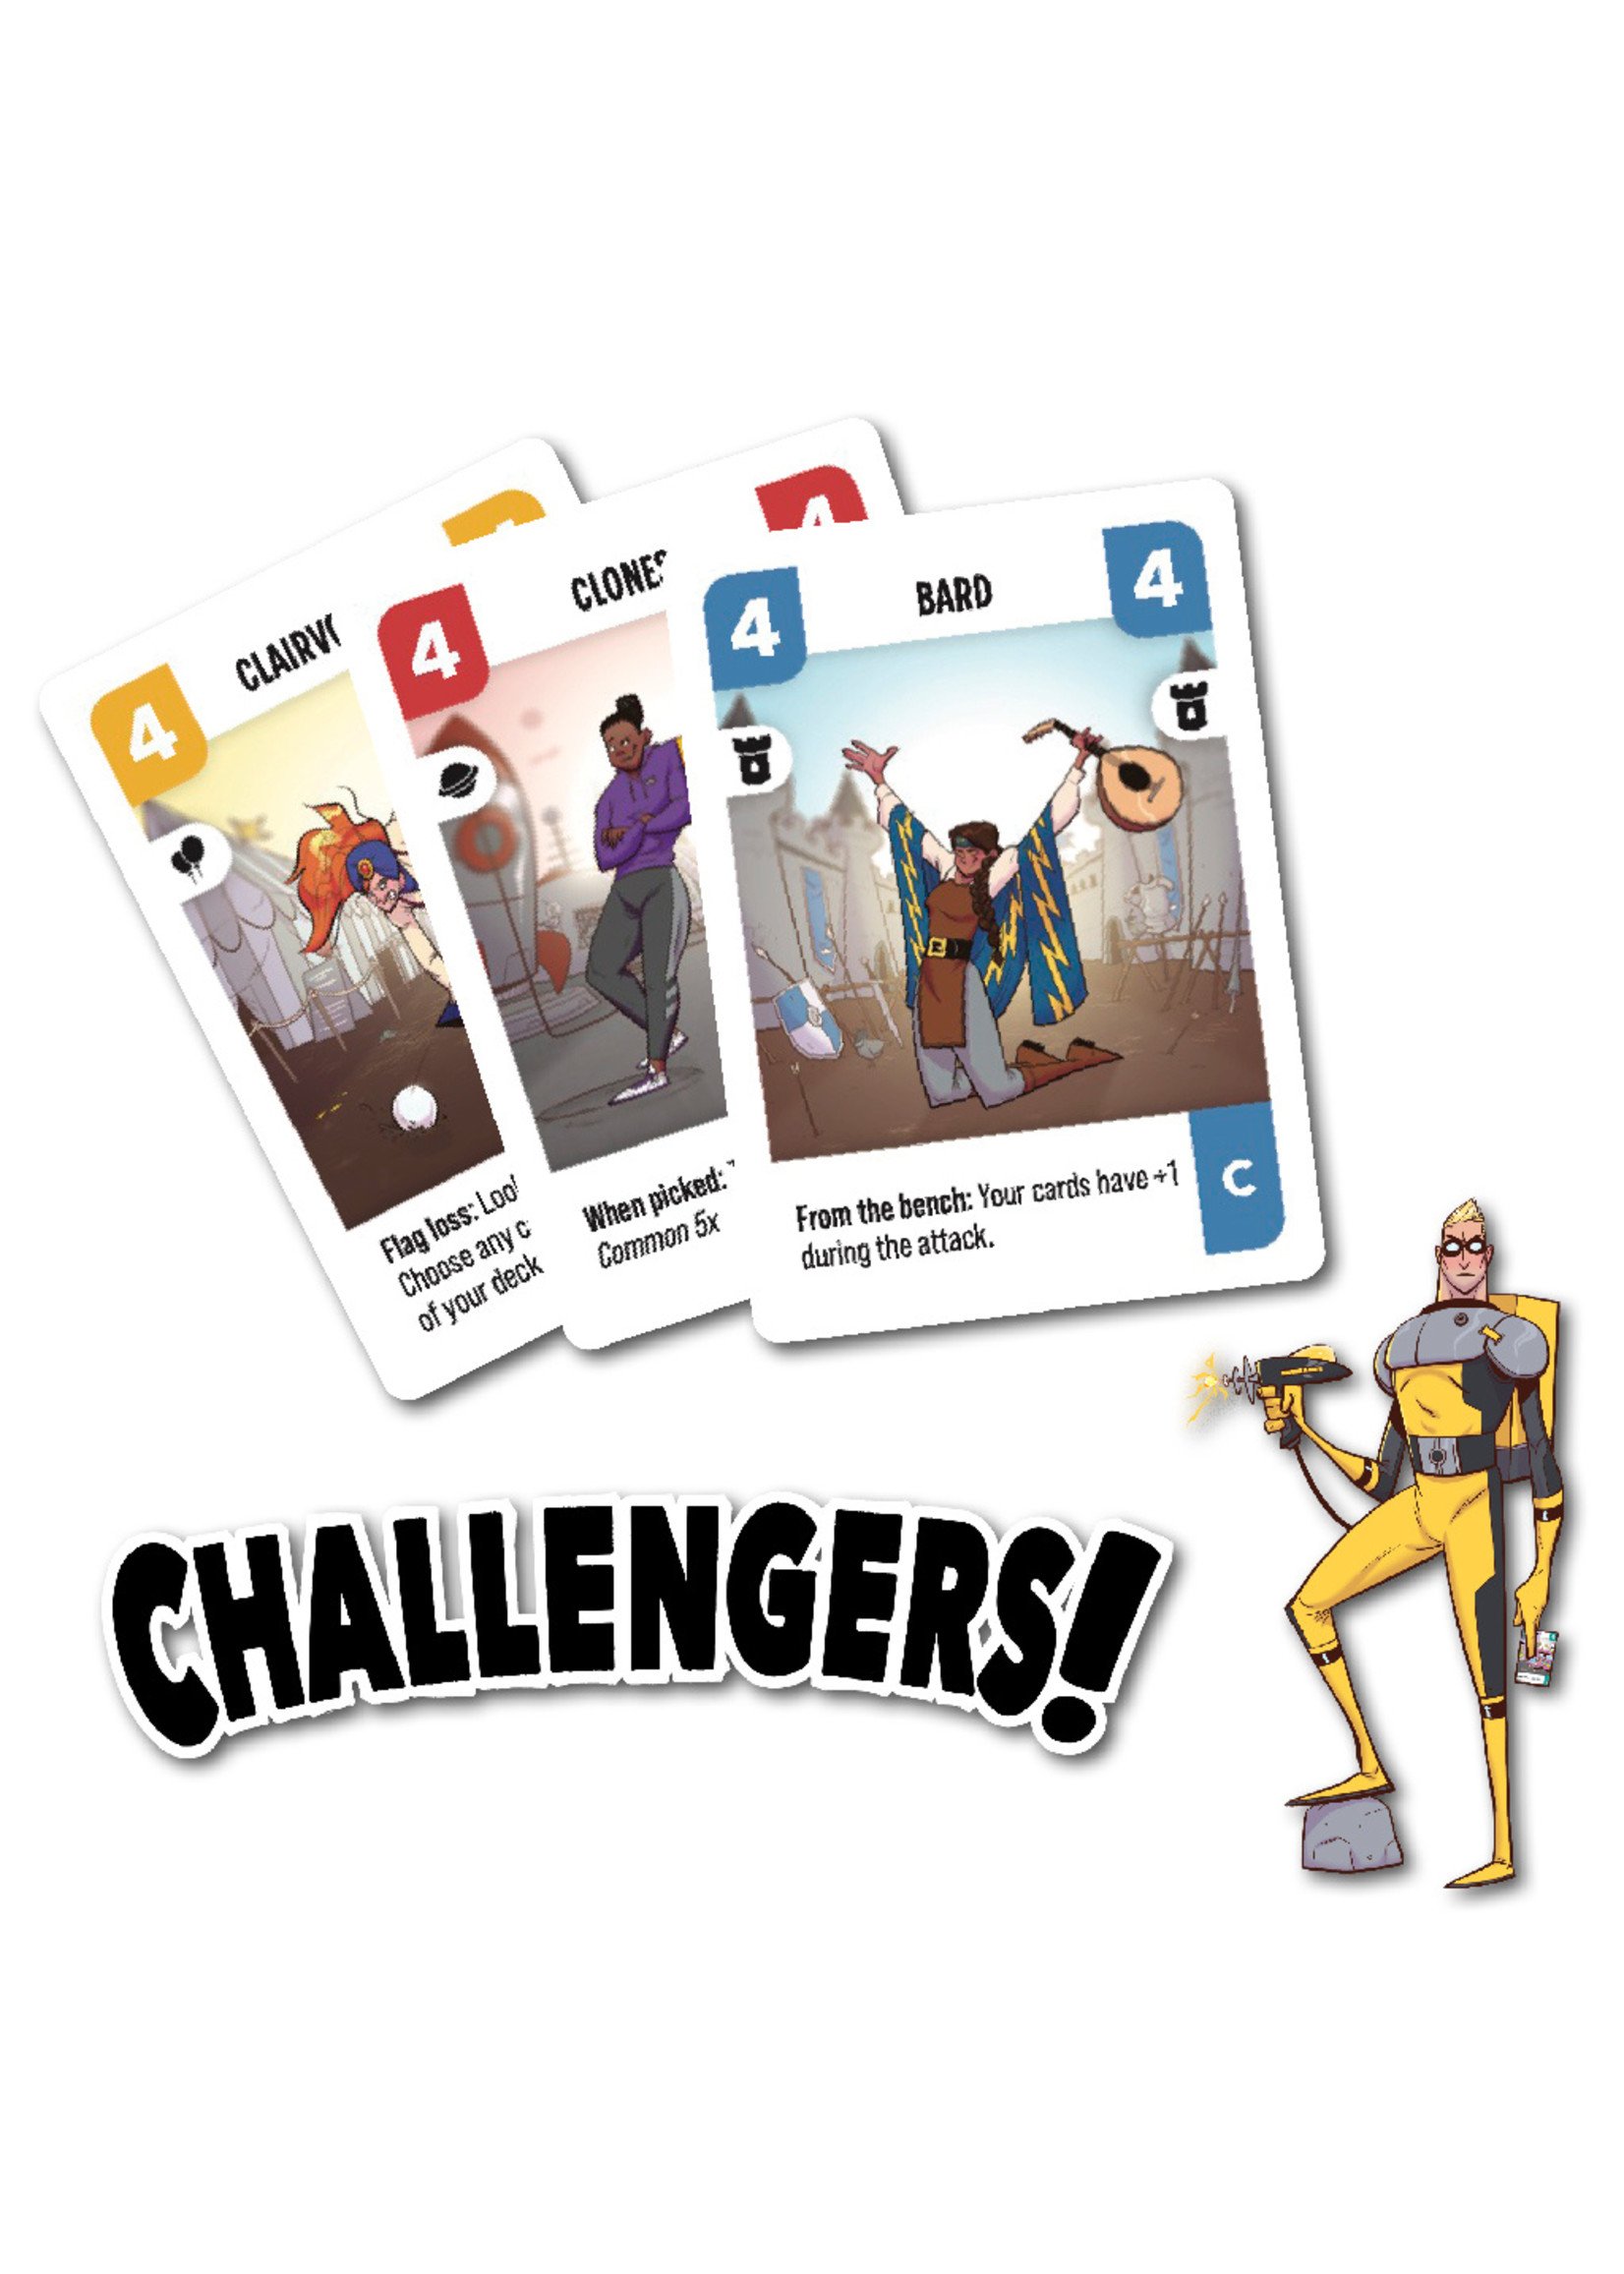 Z-Man Games Challengers